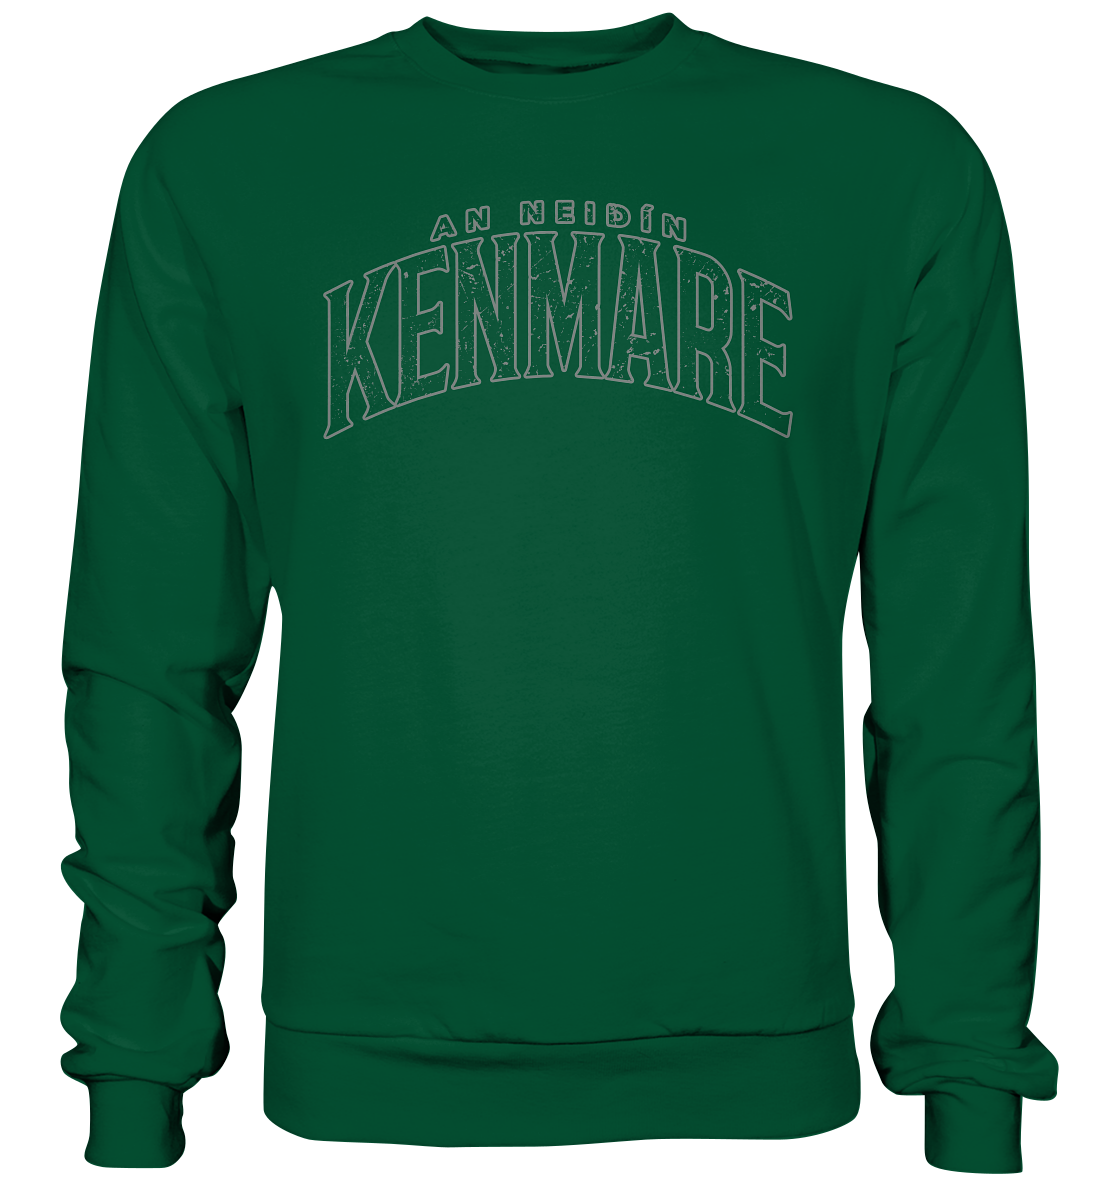 Cities Of Ireland "Kenmare" - Basic Sweatshirt